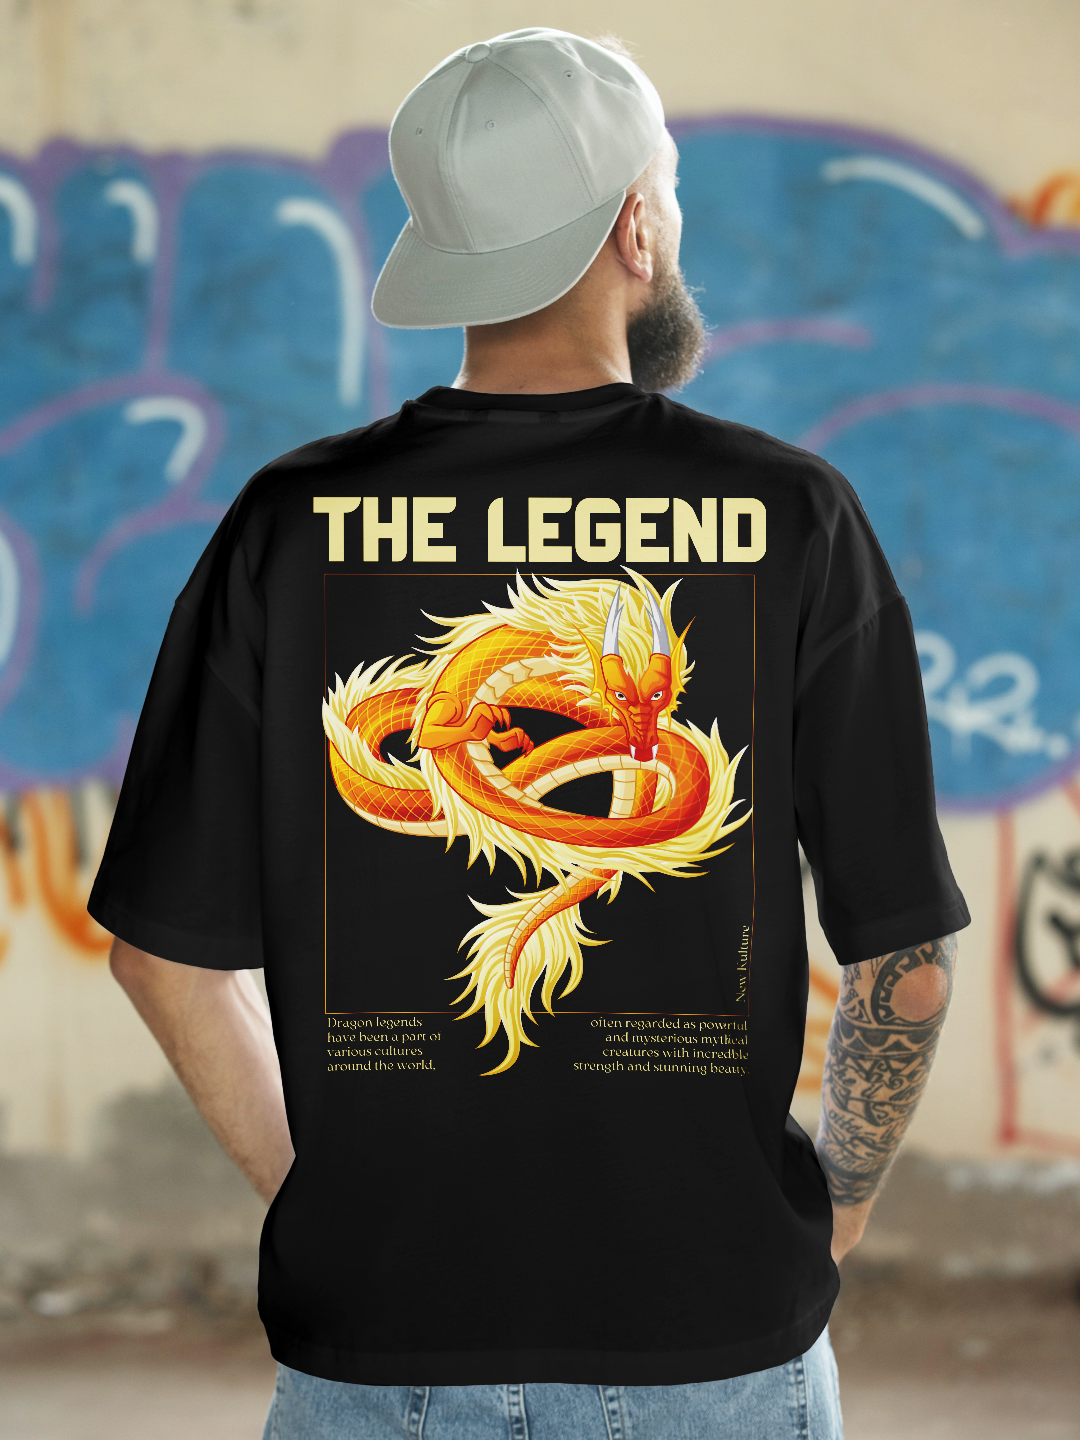 Men's Oversized T-shirt with Dragon Legend design – Black Color Option